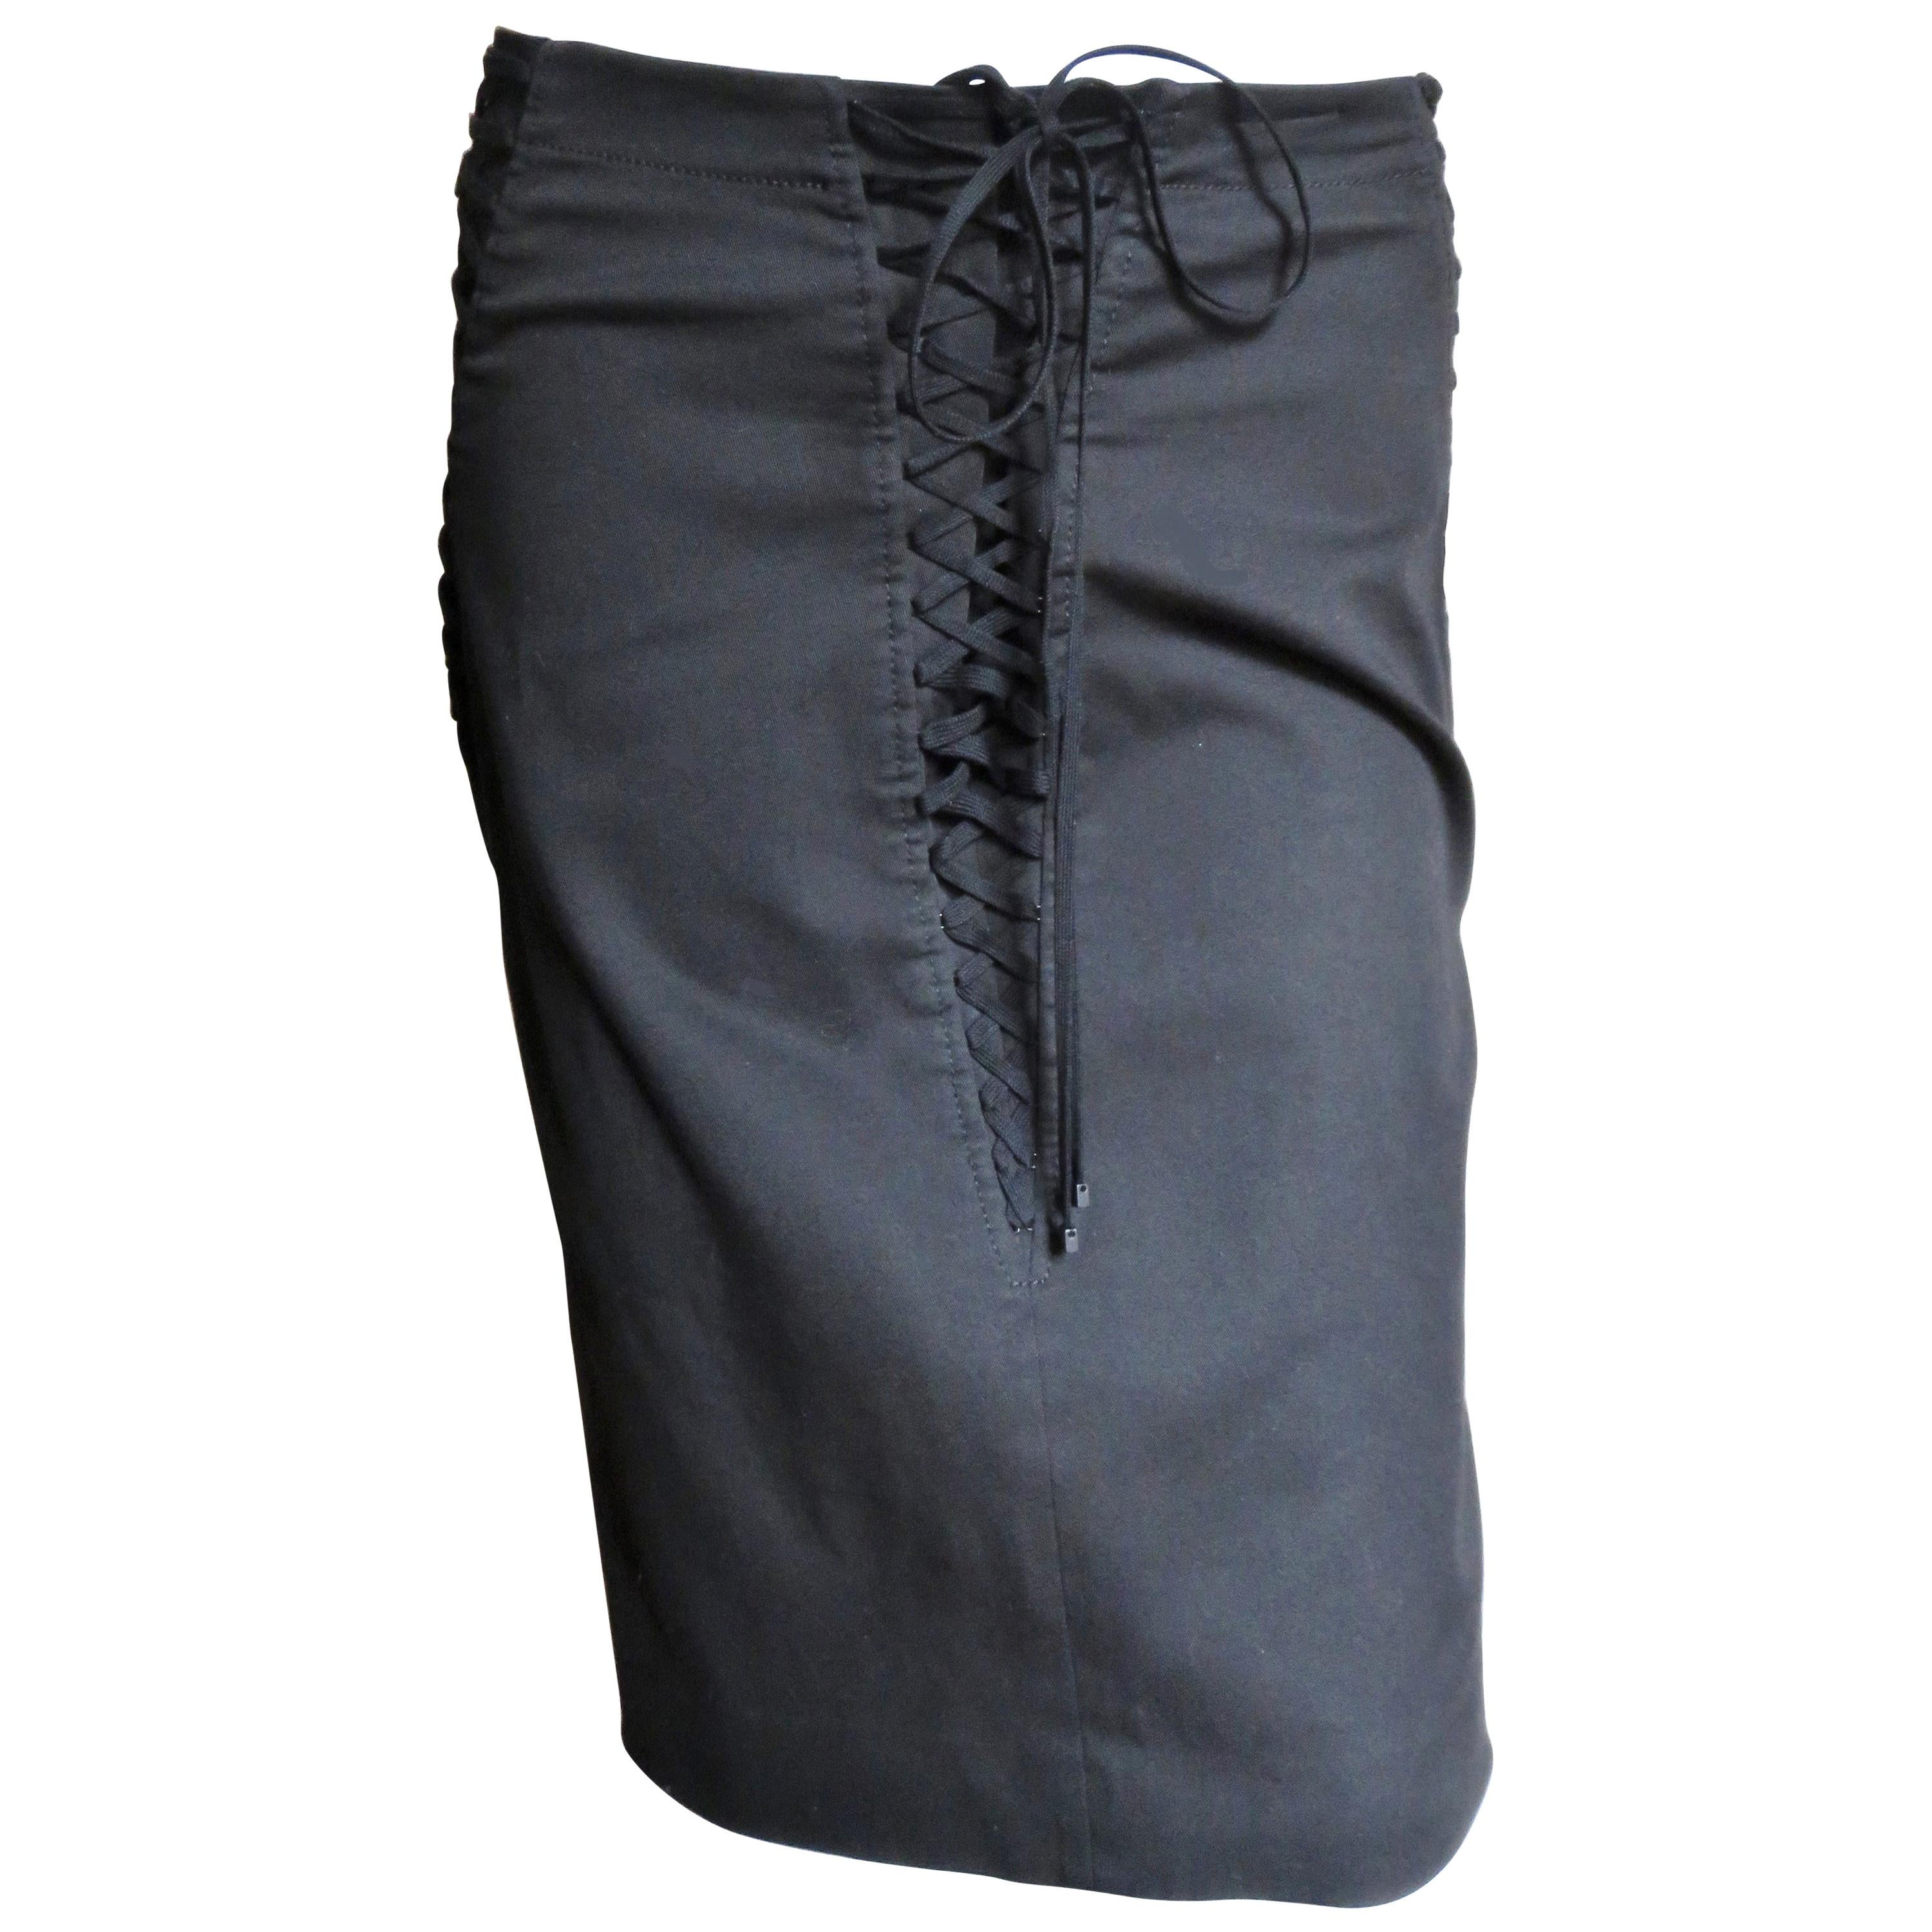 Dolce & Gabbana Lace Up Skirt